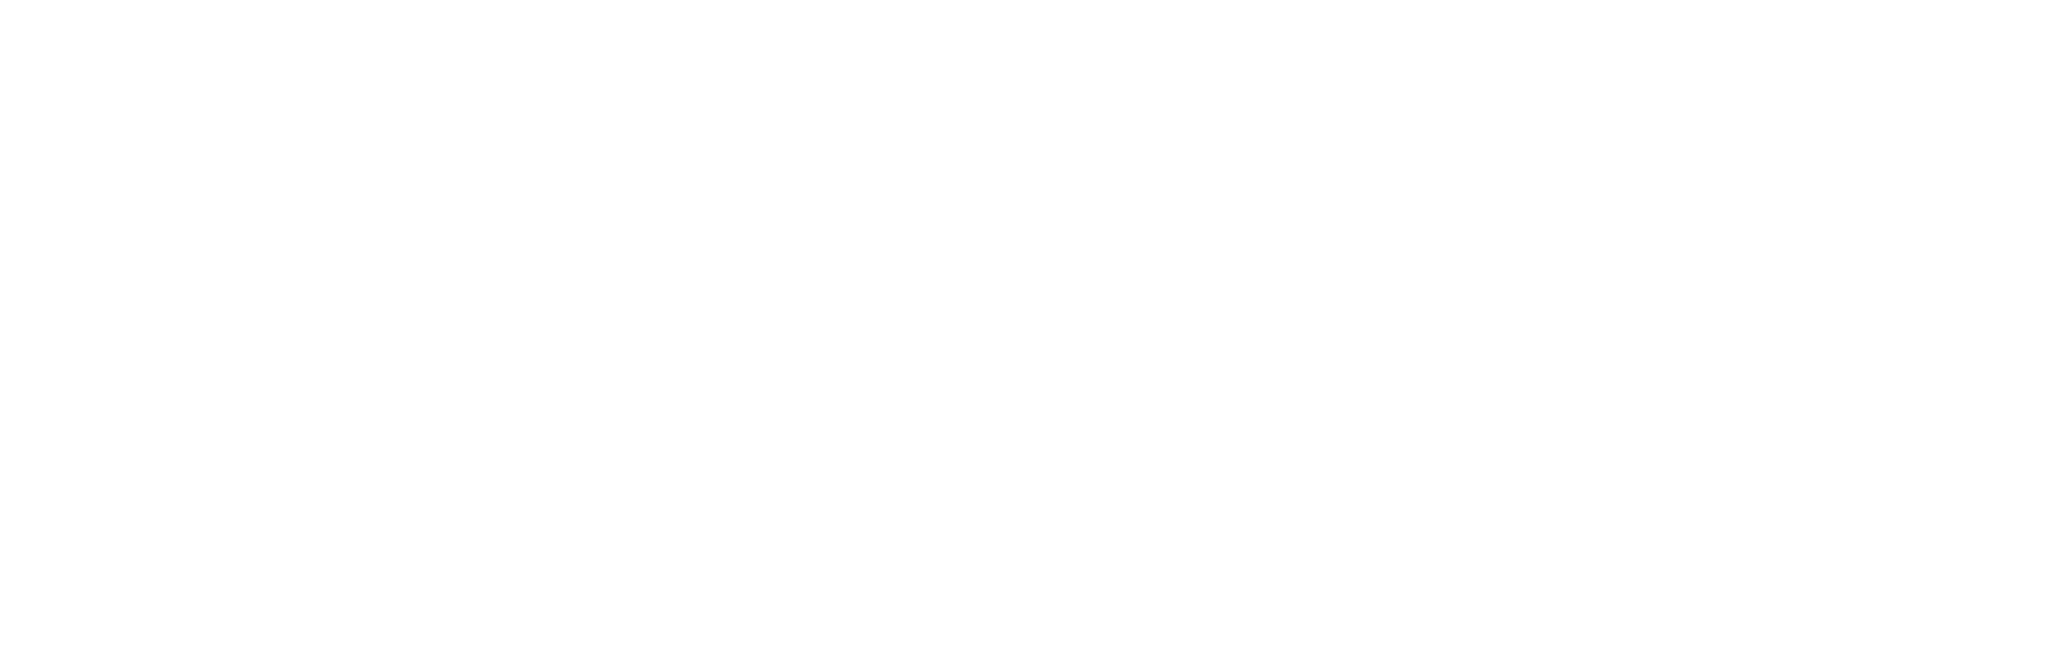 Superior Propane Logo In White Font